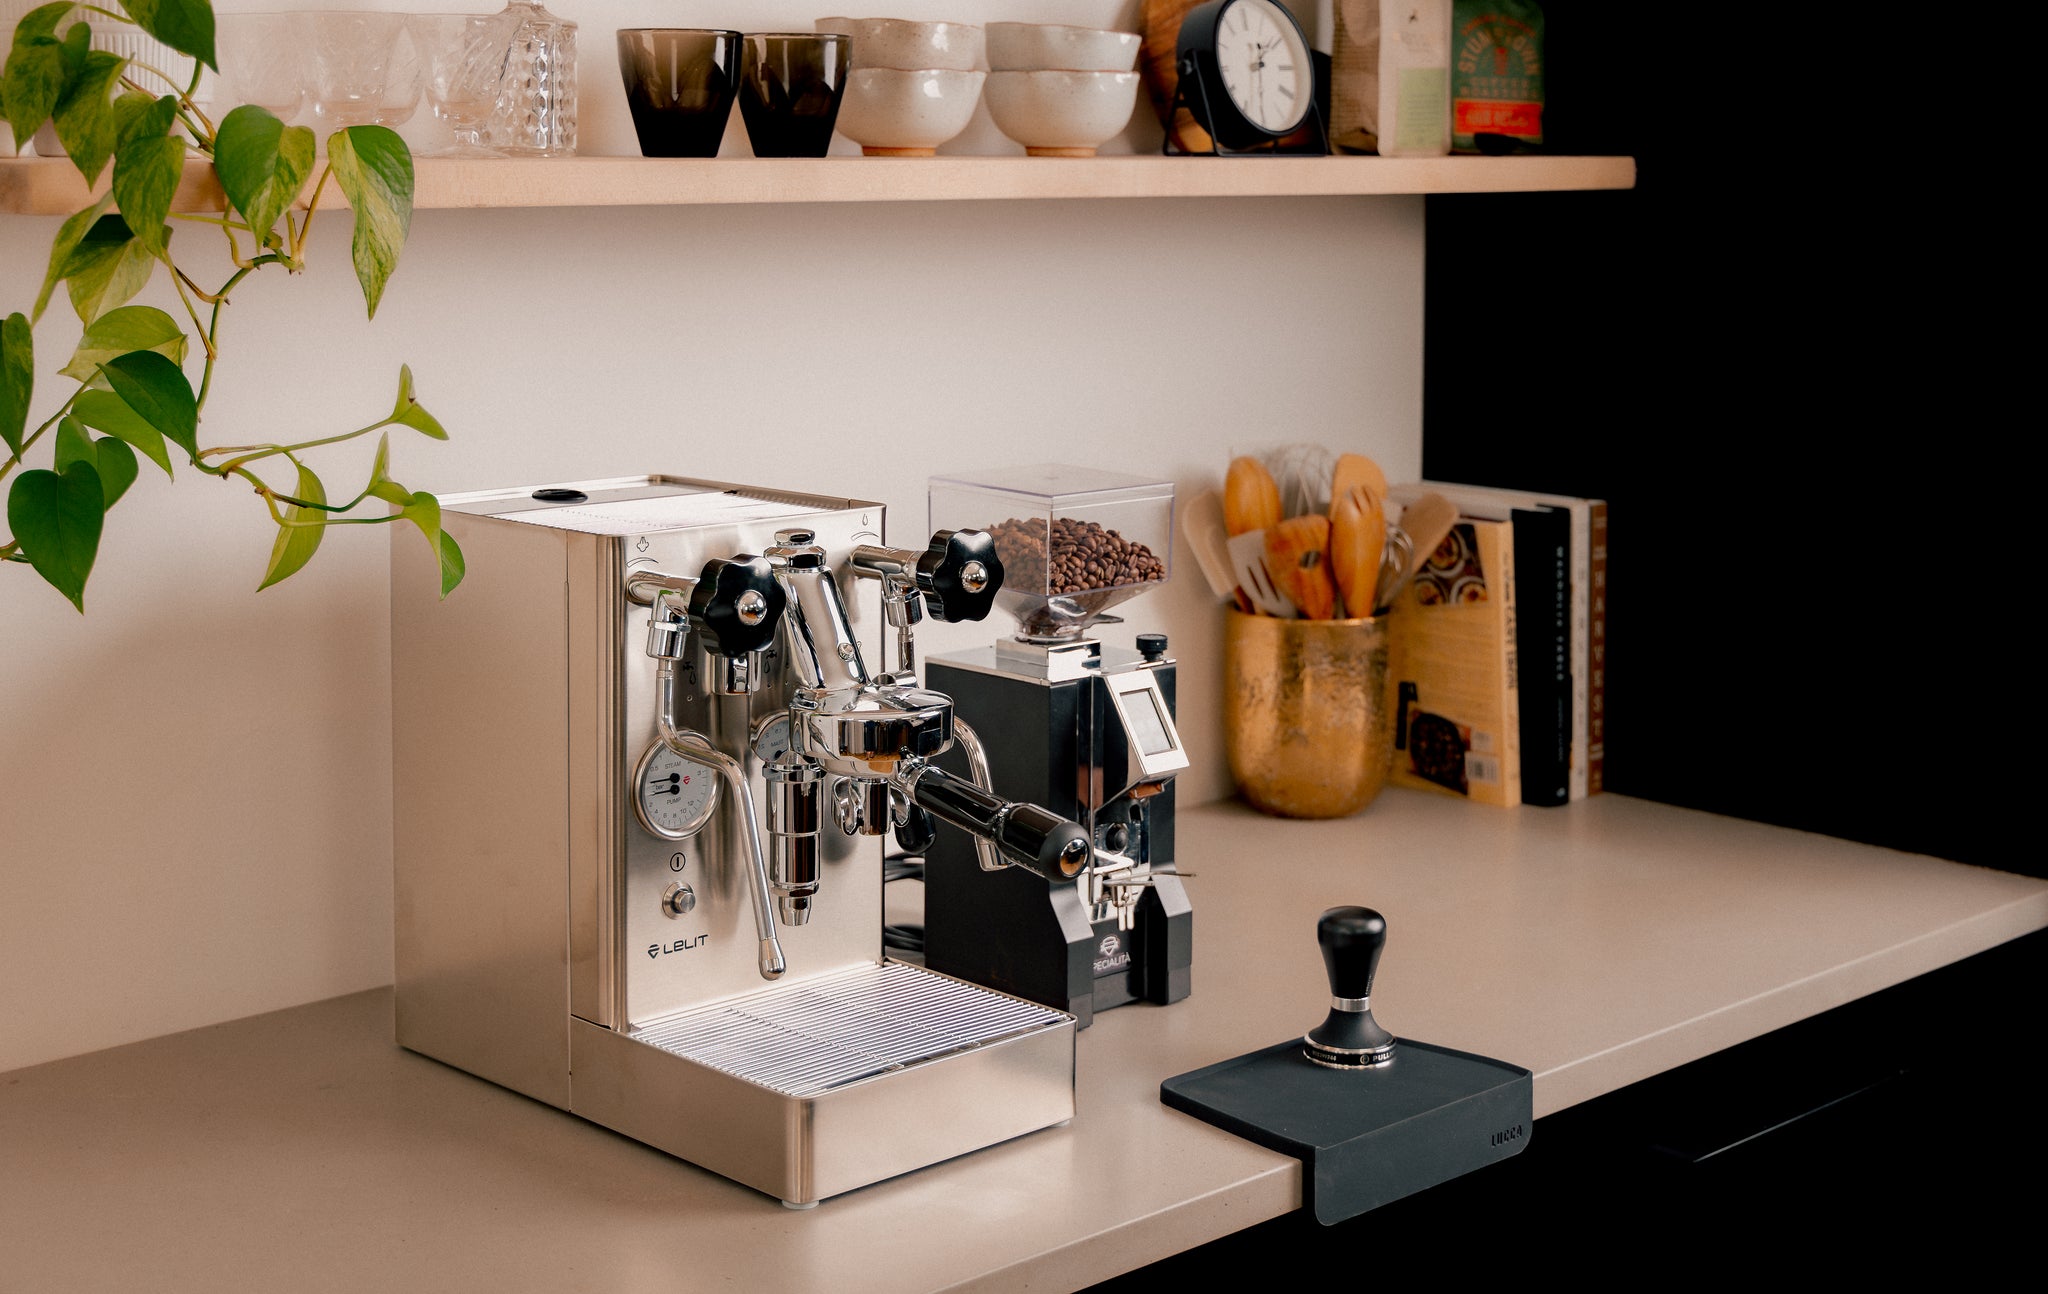 Lelit Mara X espresso machine with Eureka Specialita espresso grinder